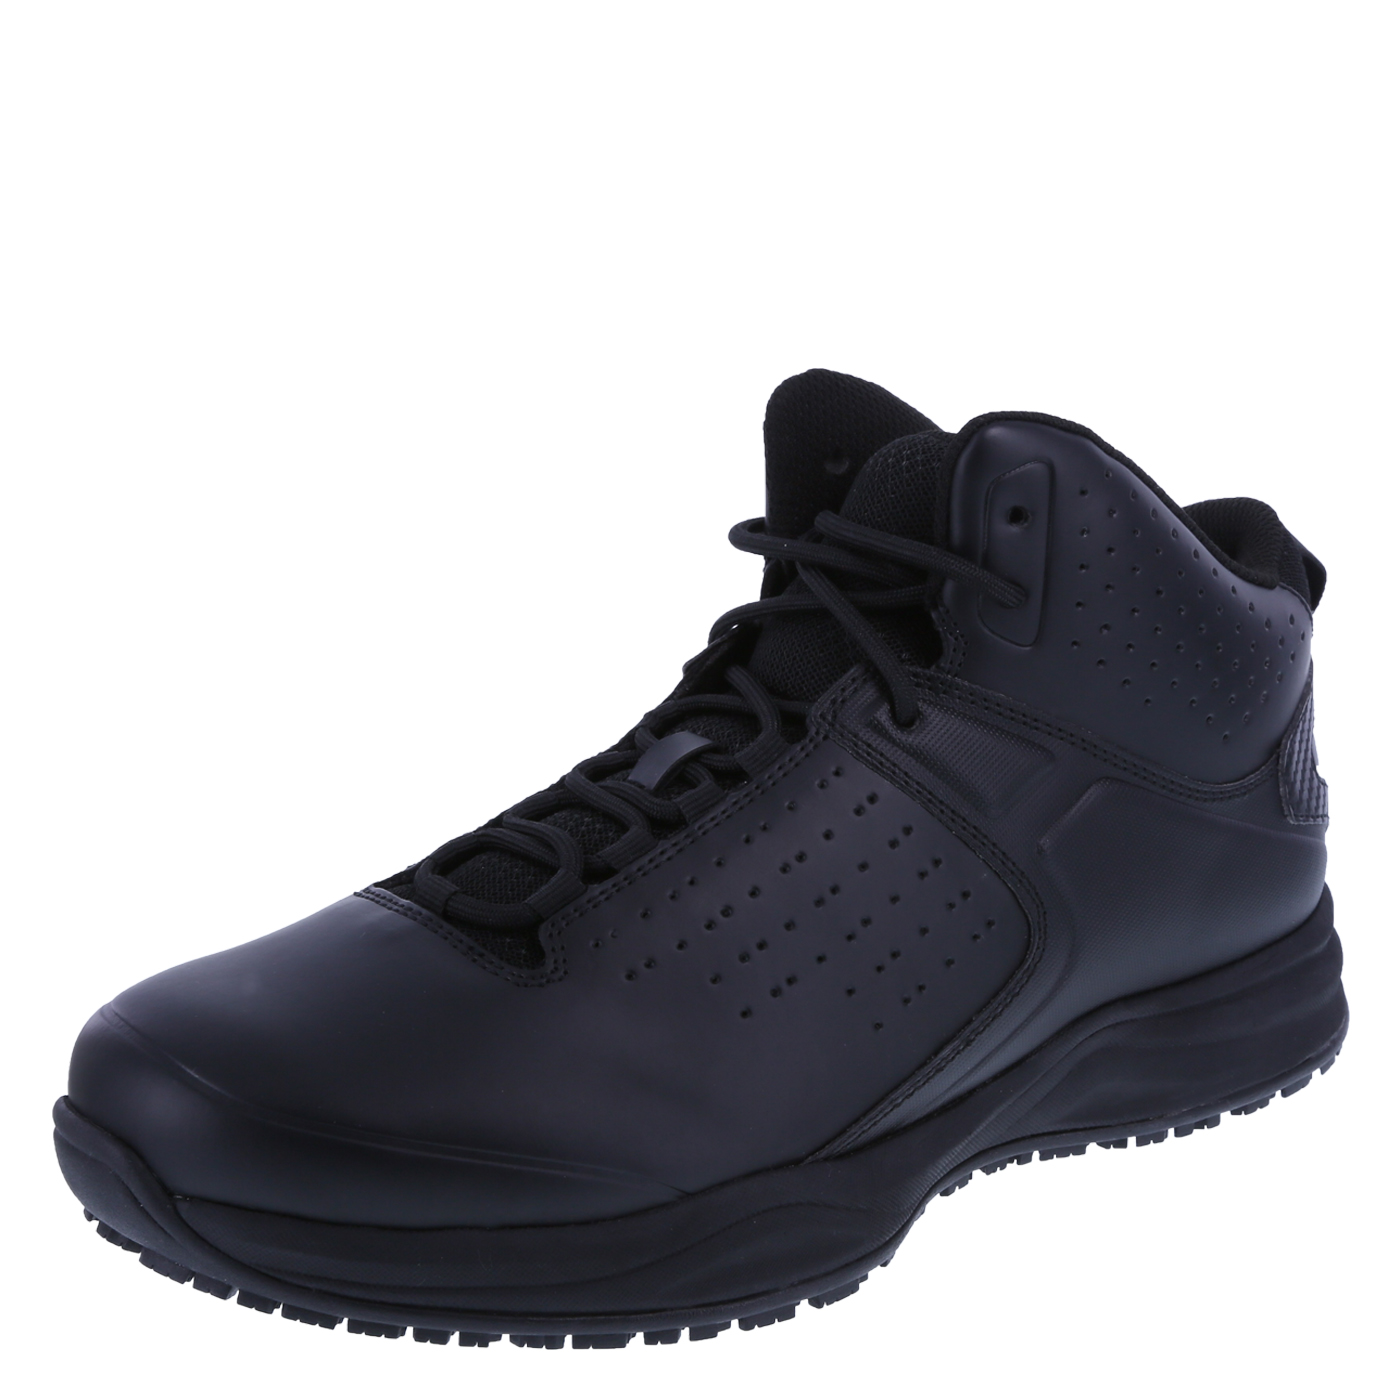 work shoes for men menu0027s slip resistant trifecta mid-top sneakermenu0027s slip resistant trifecta  mid-top sneaker, black TZDZBIK